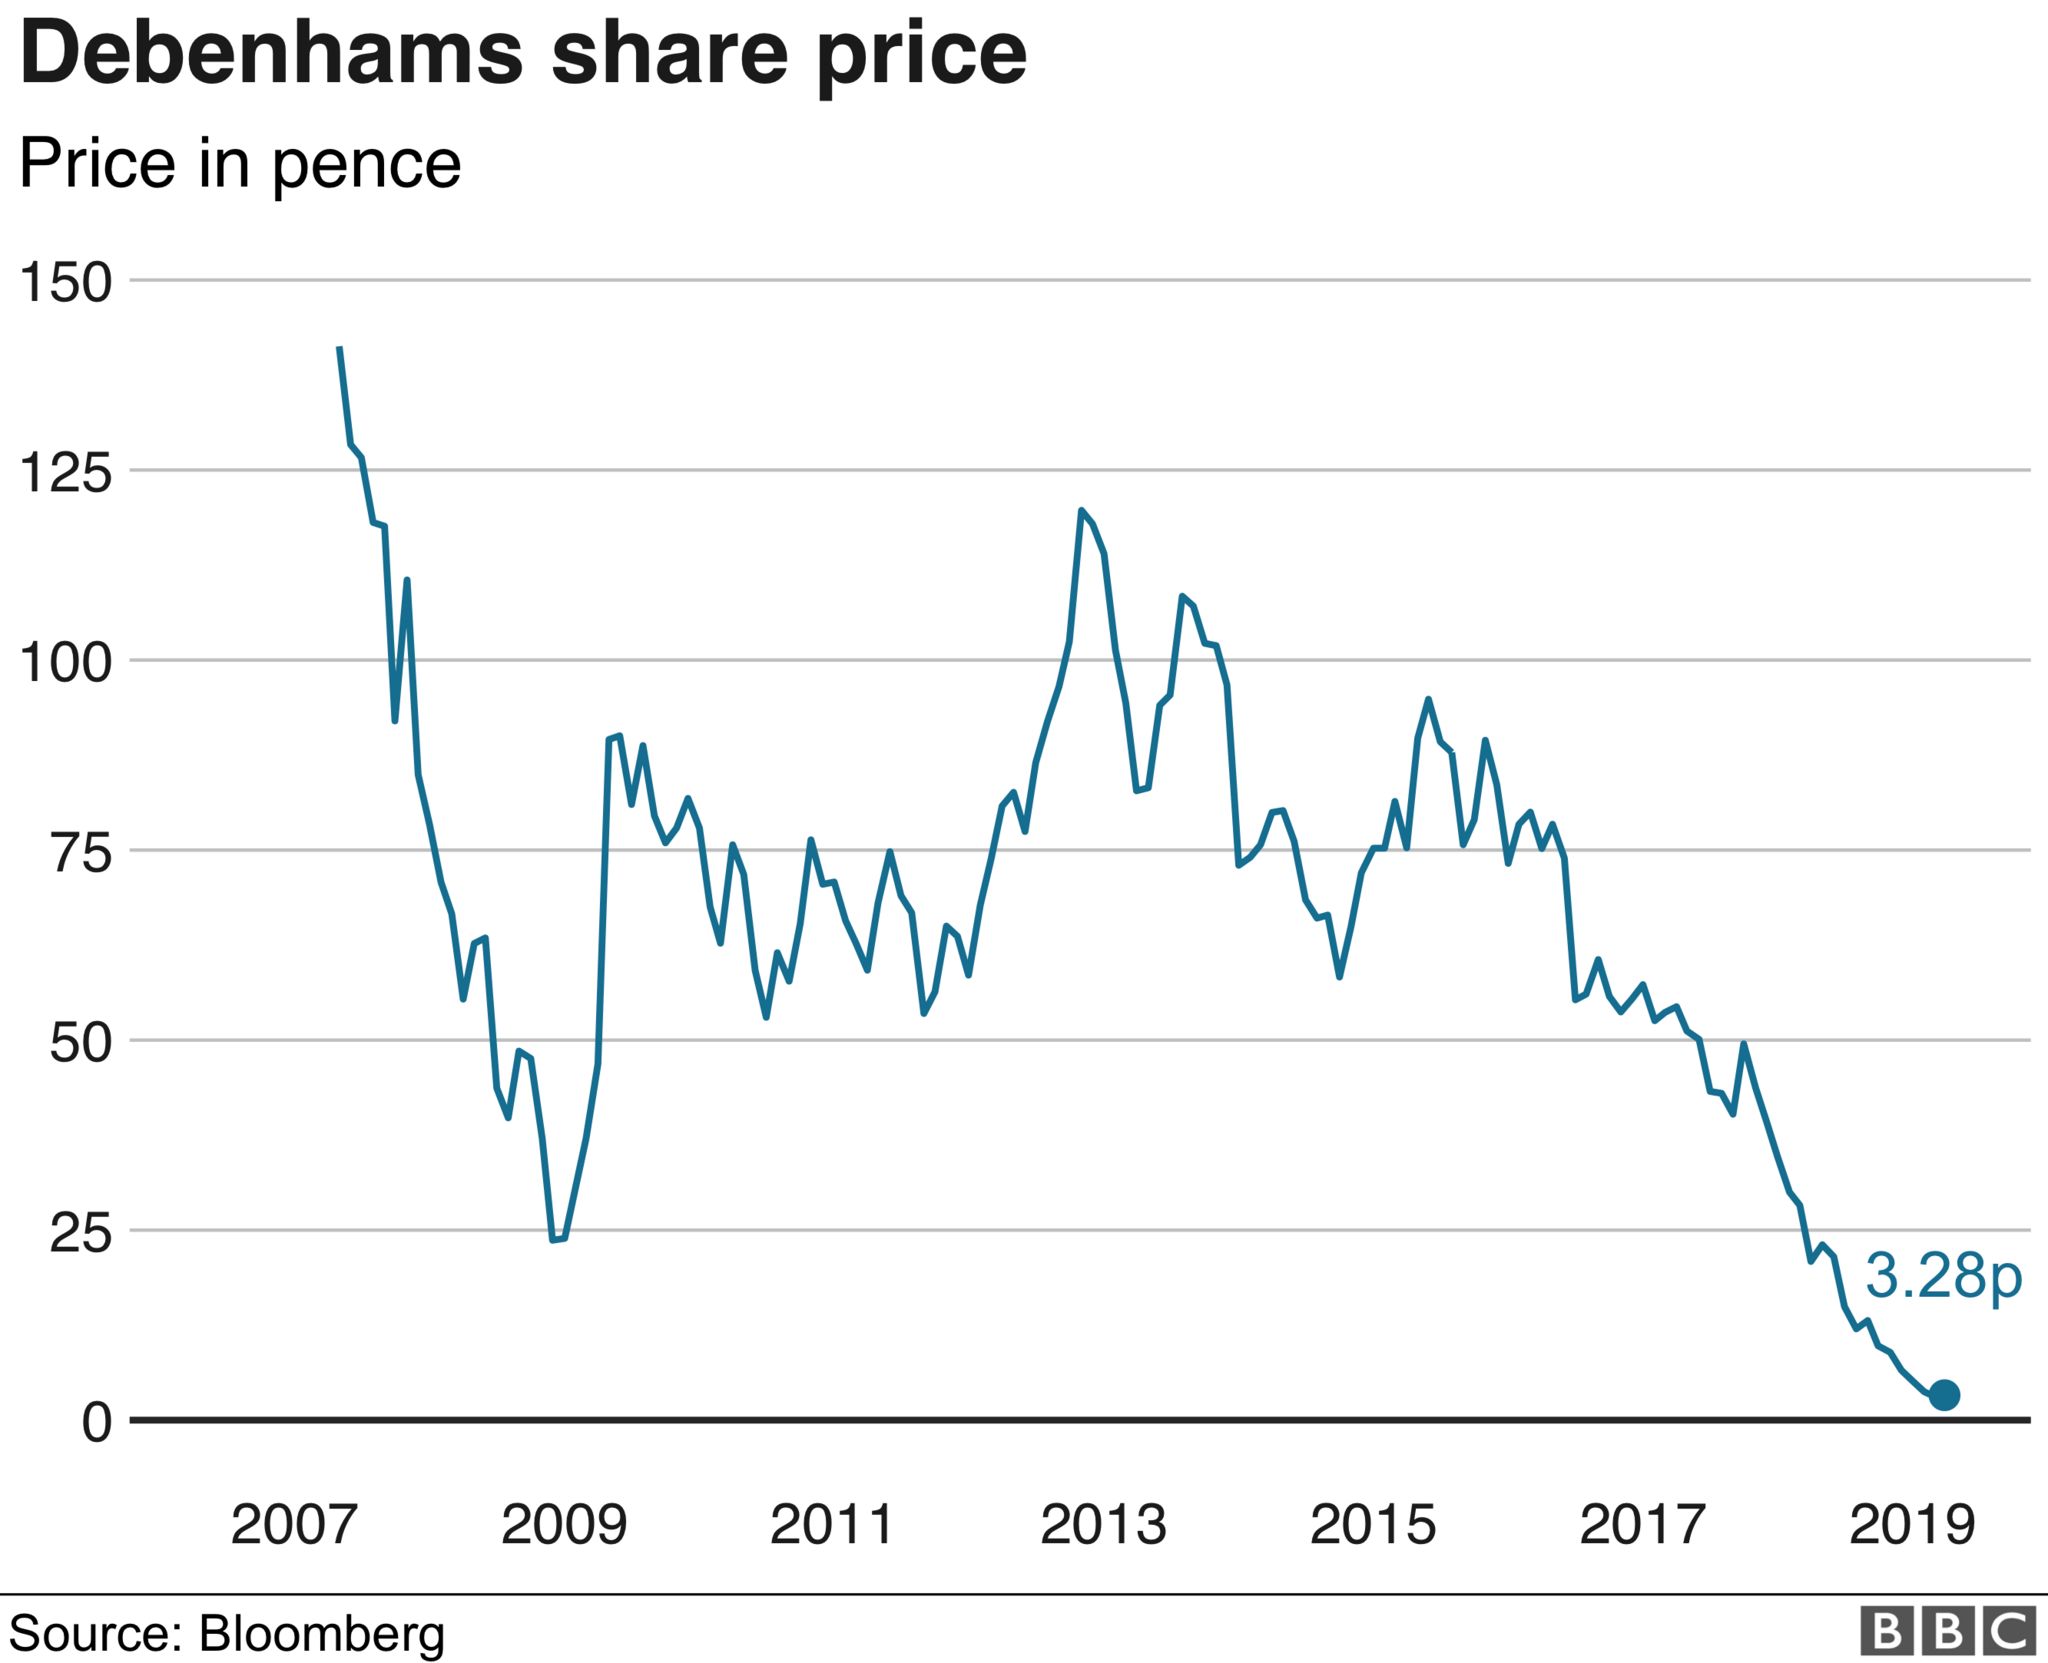 Debenhams considers asset sale as it battles rivals' price cuts, Debenhams